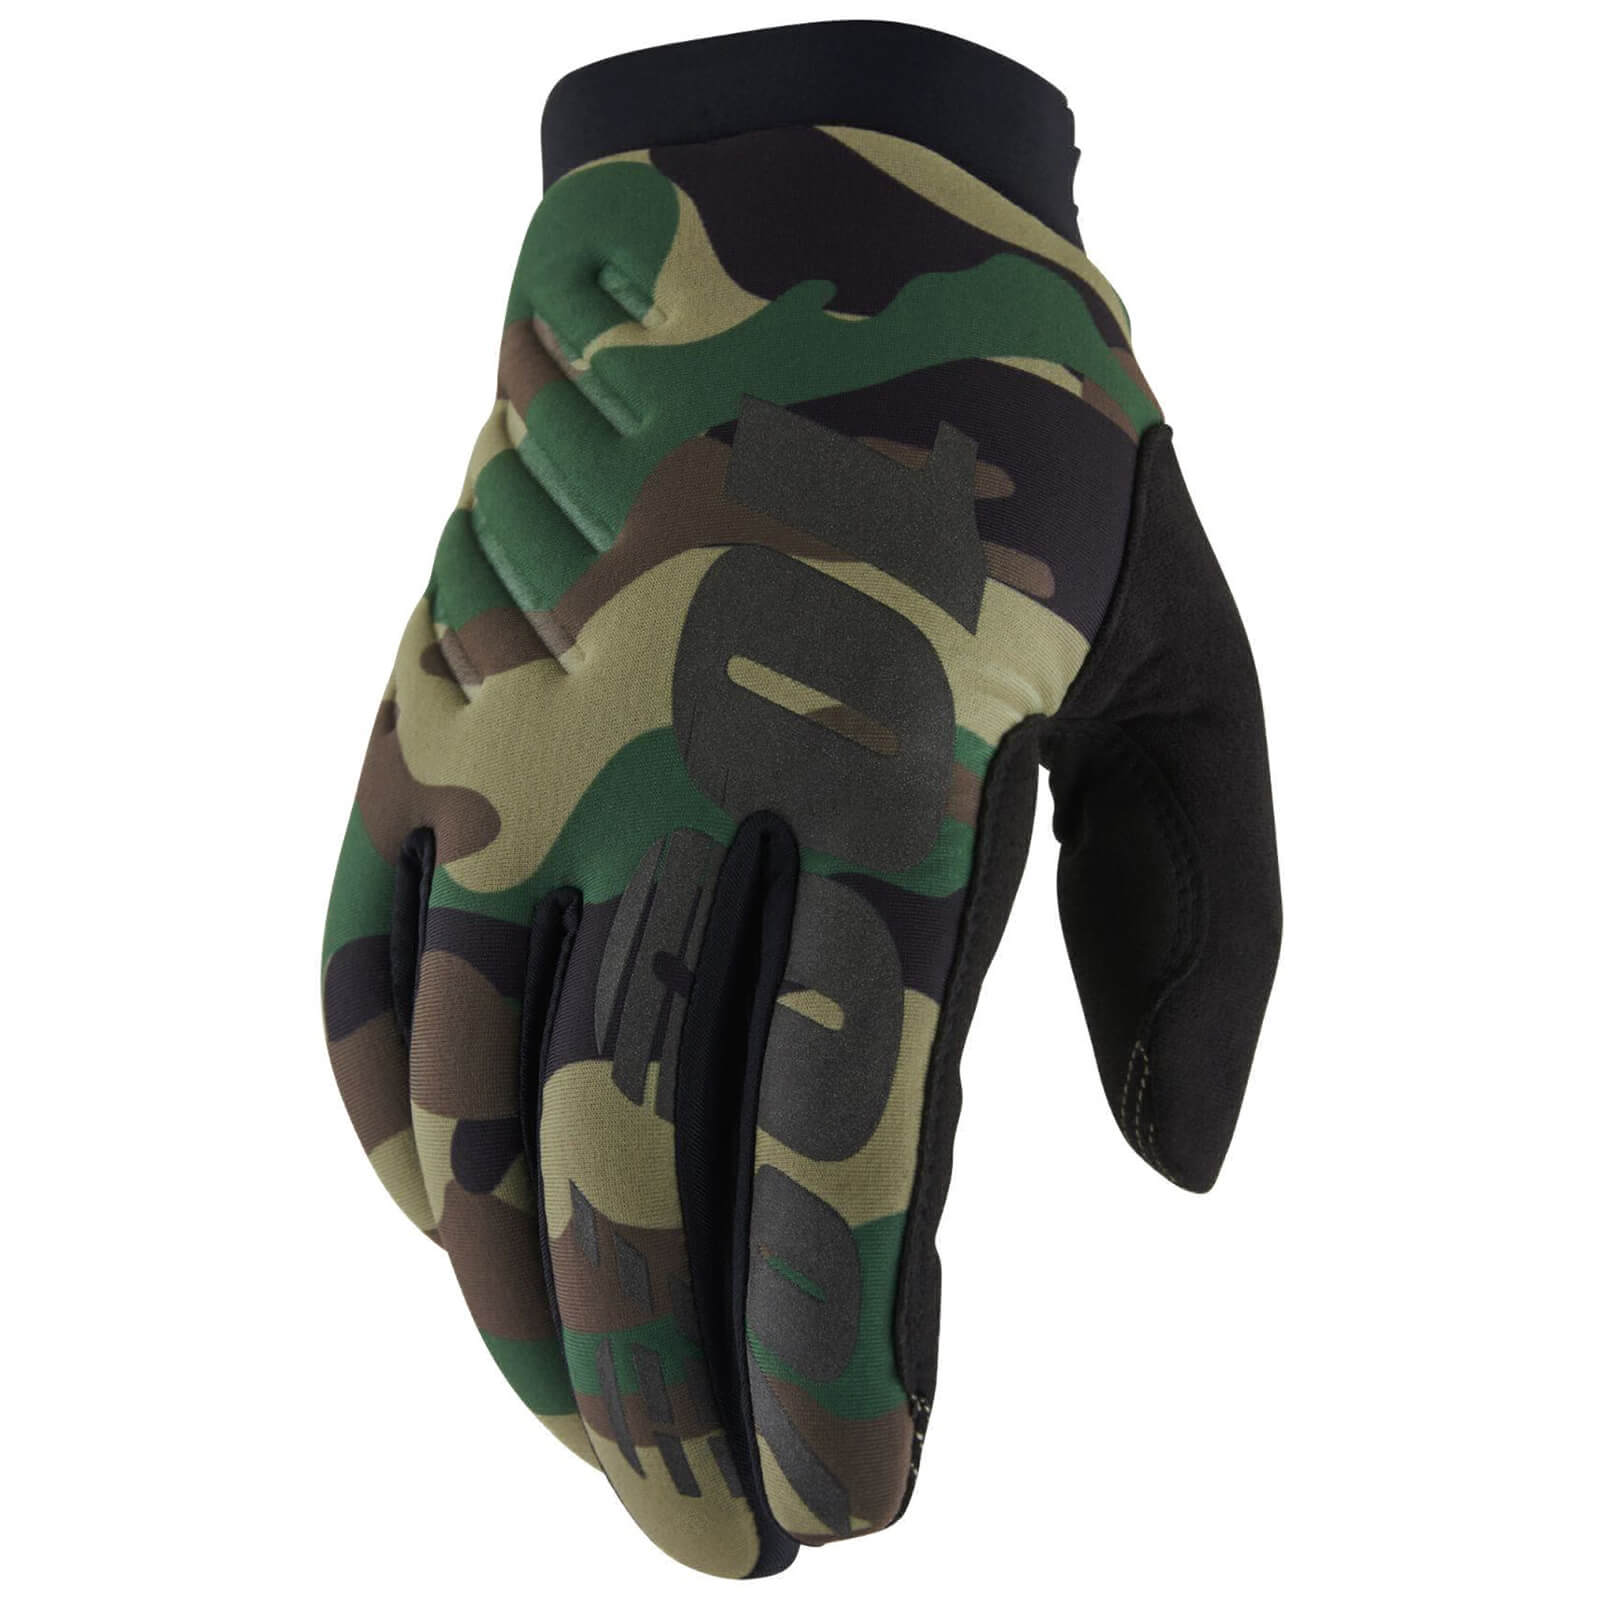 100% Brisker MTB Gloves - L - Camo/Black